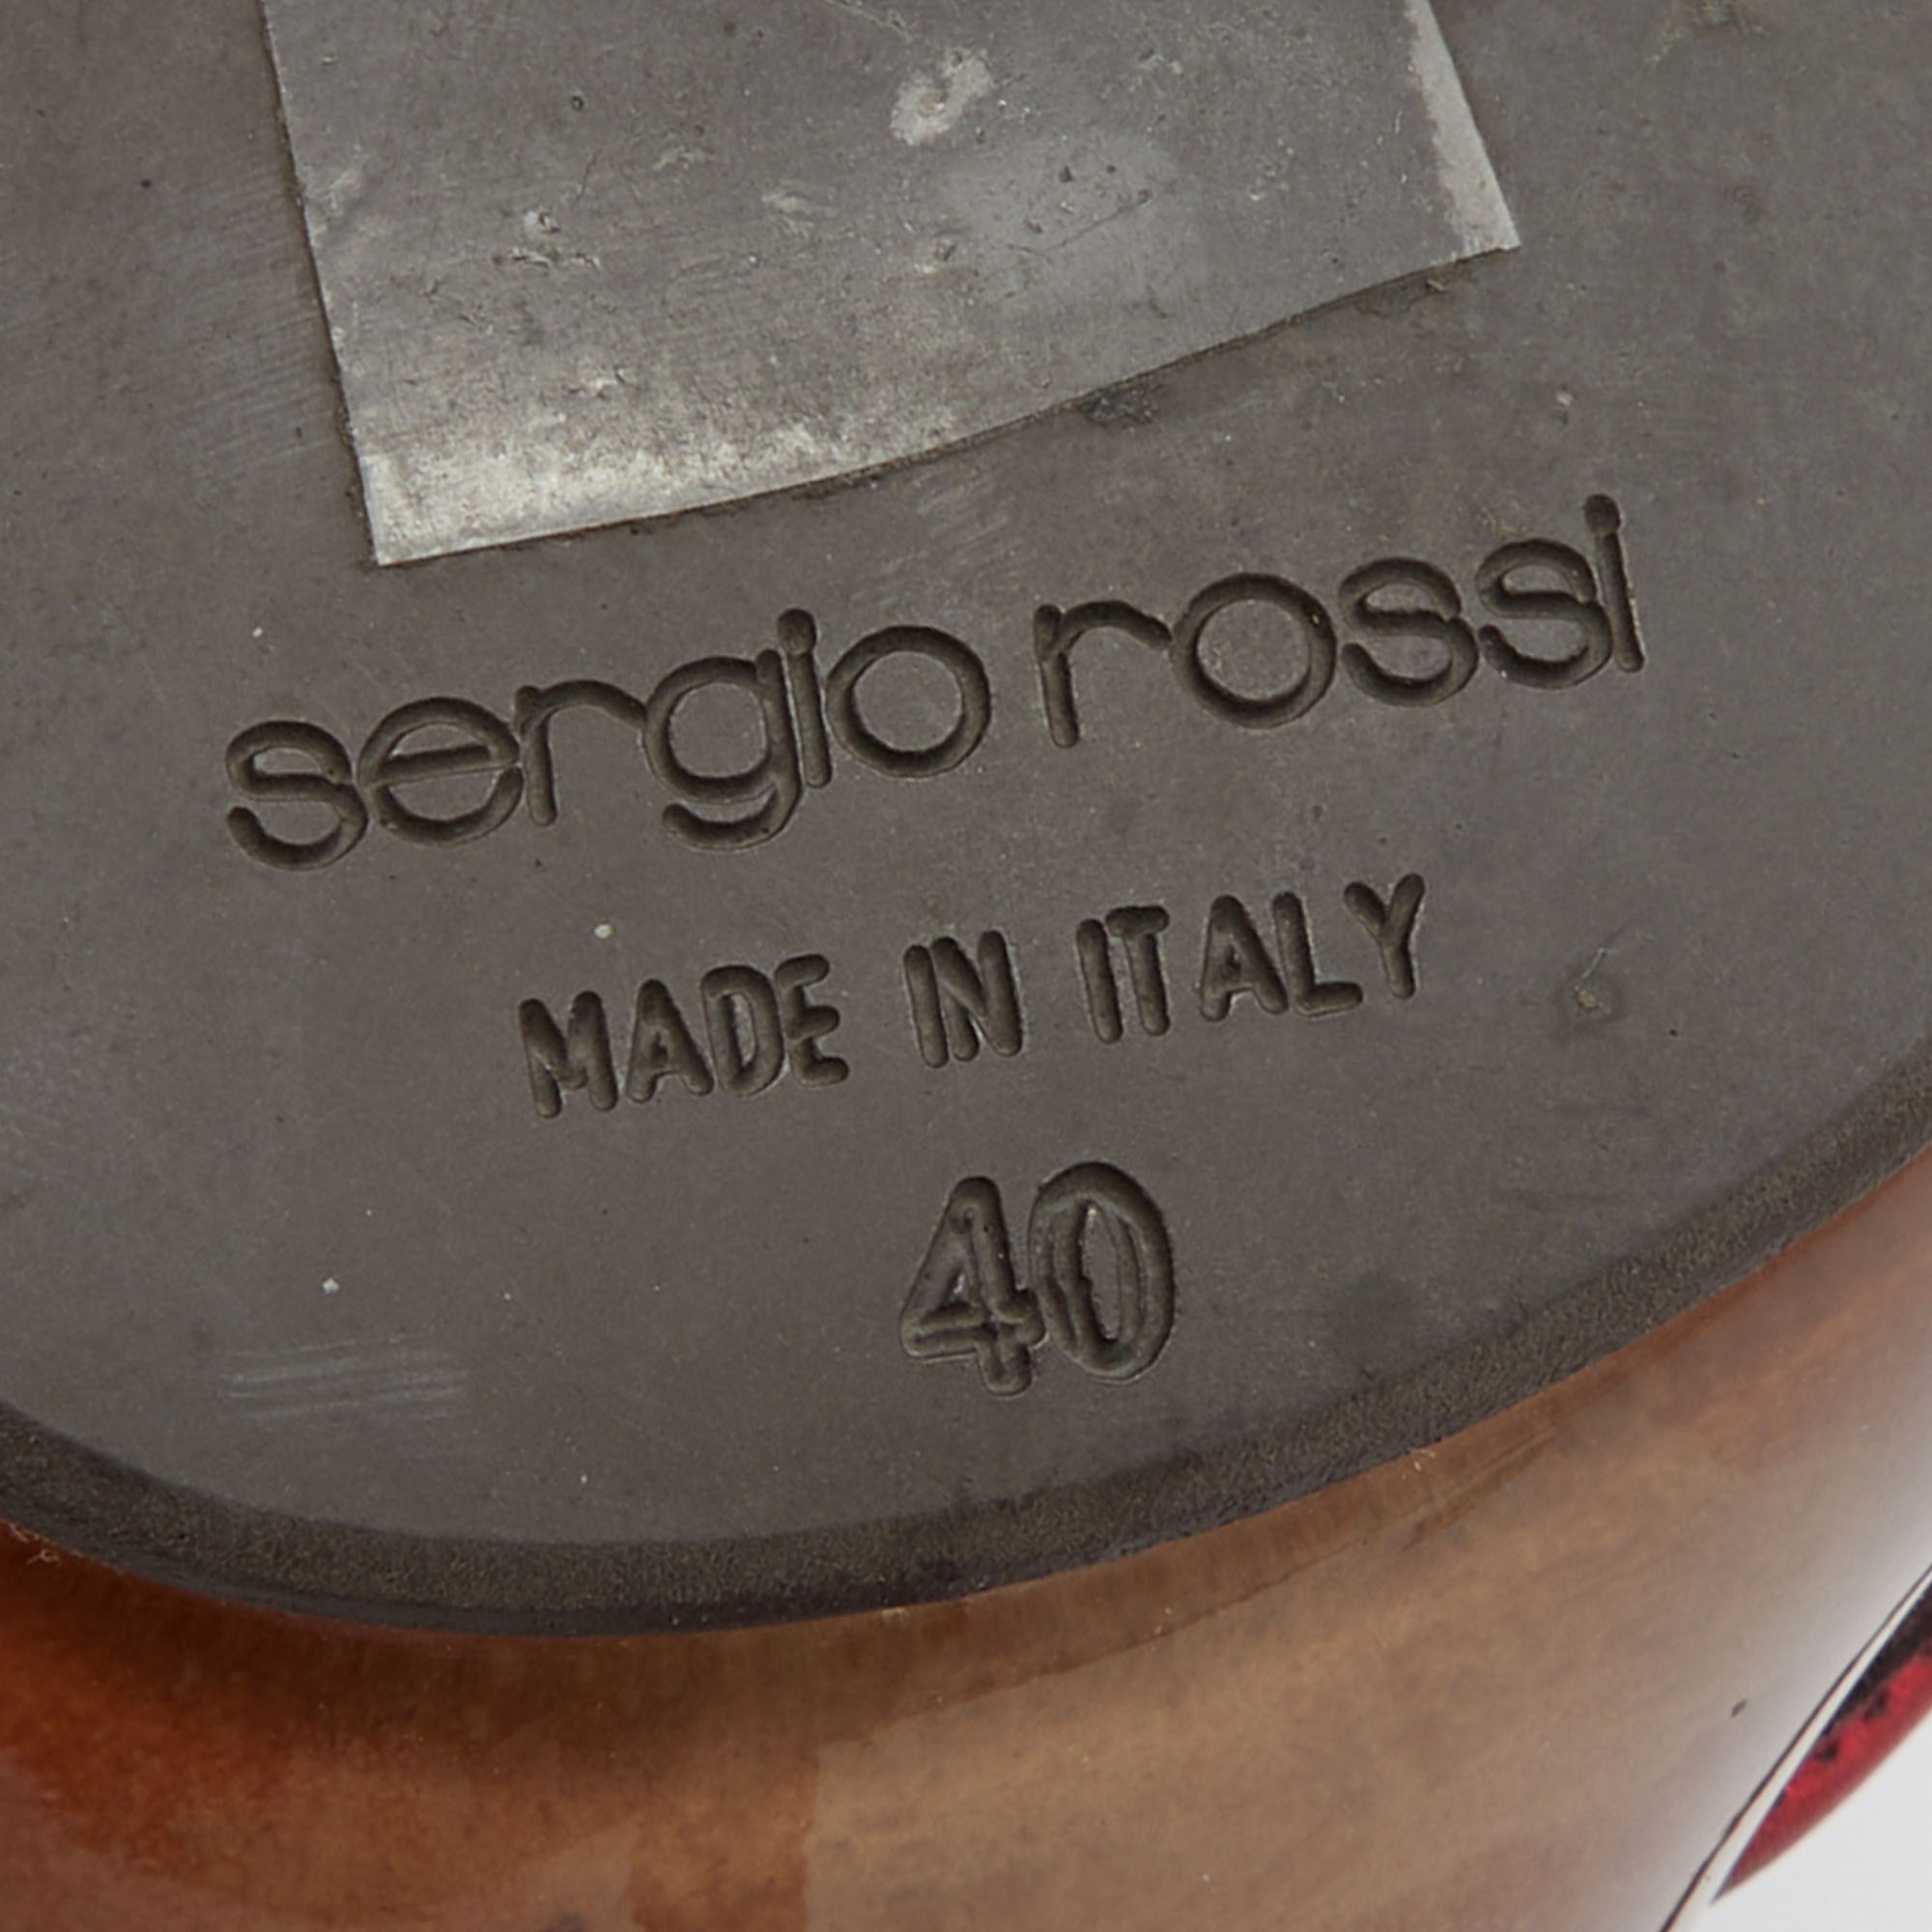 Sergio Rossi Beige/Red Leather Crystal Embellished Slip On Sandals Size 40